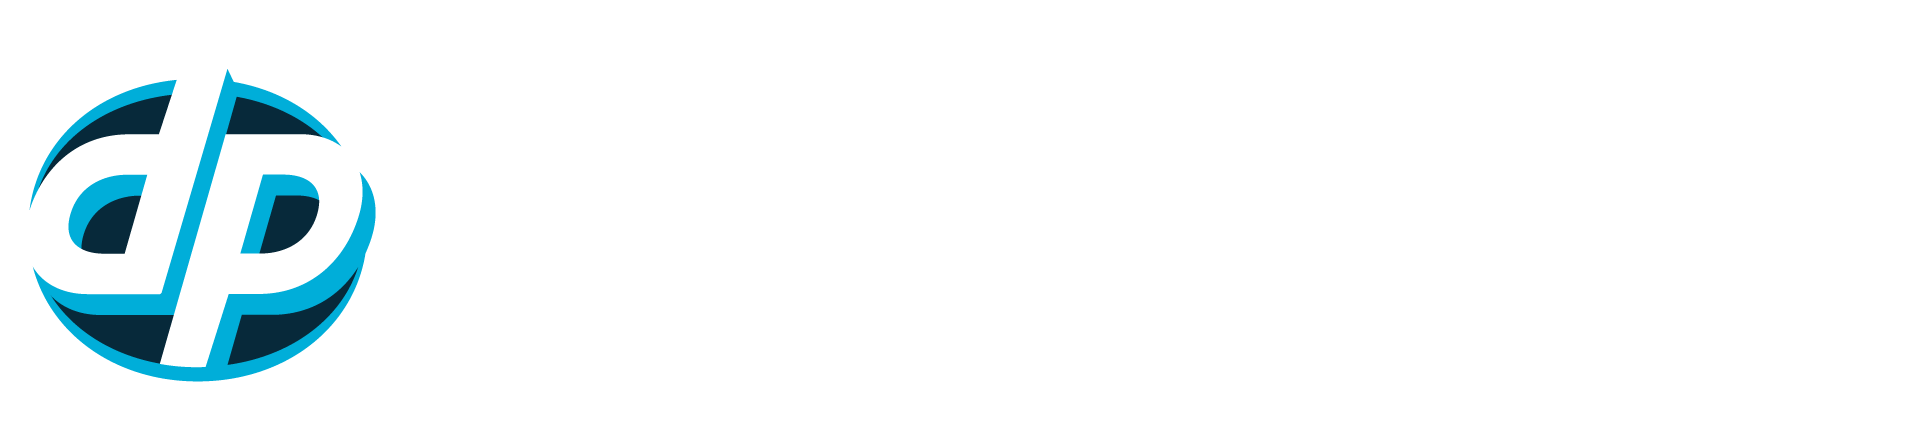 Dott Products Logo